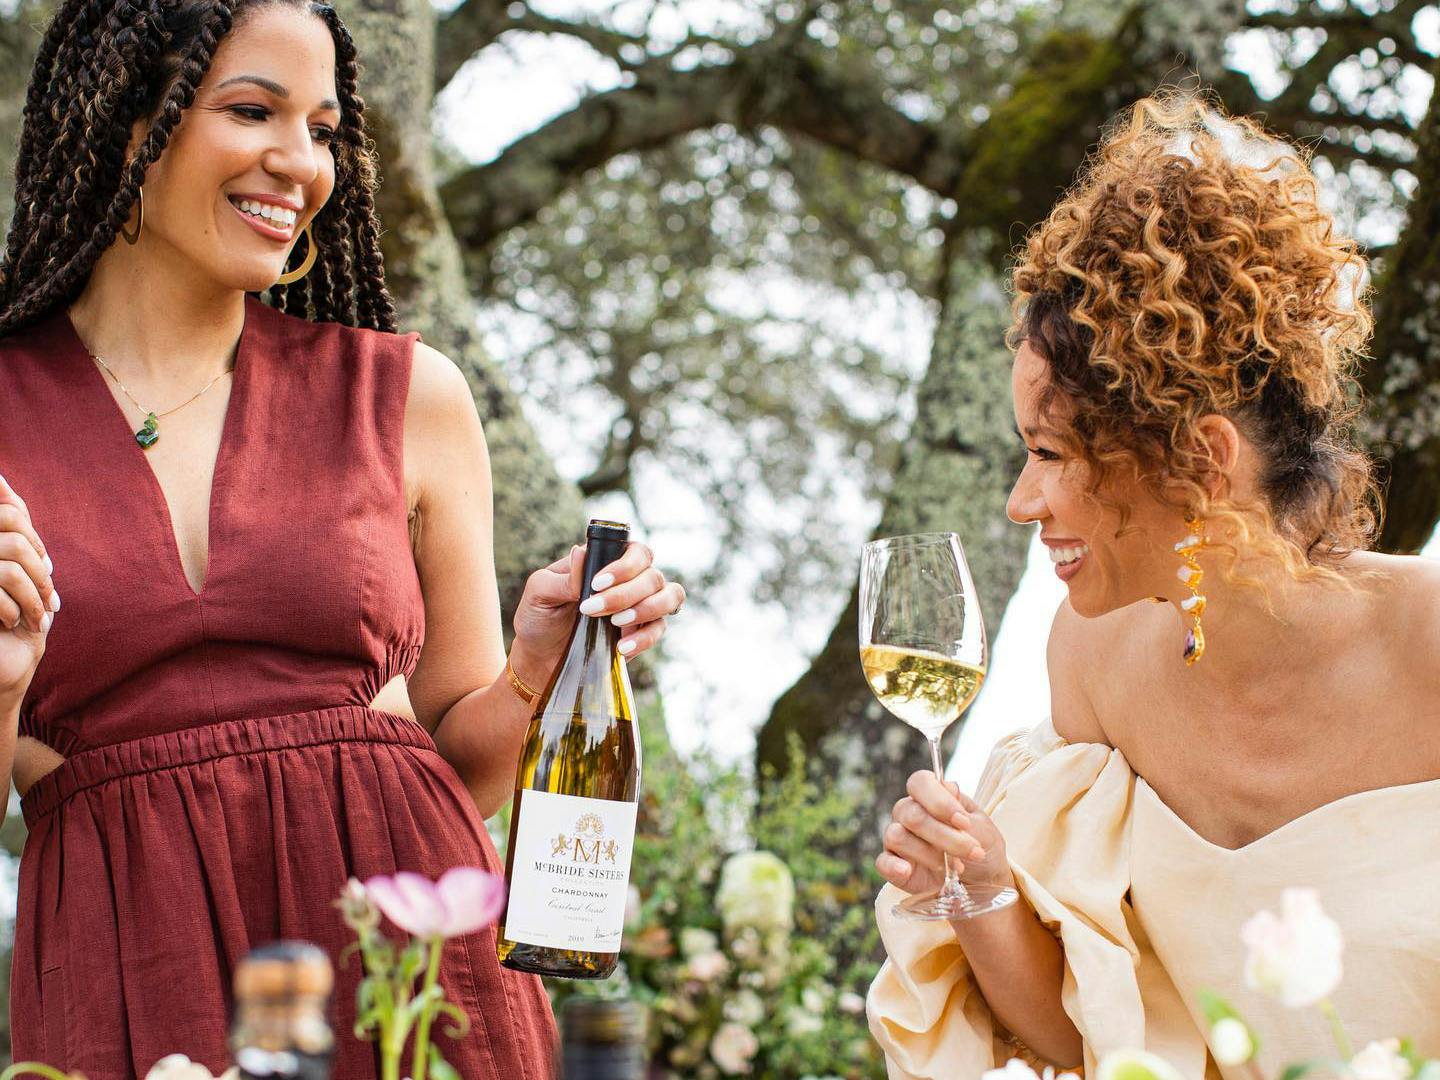 mcbride sisters wine company founders